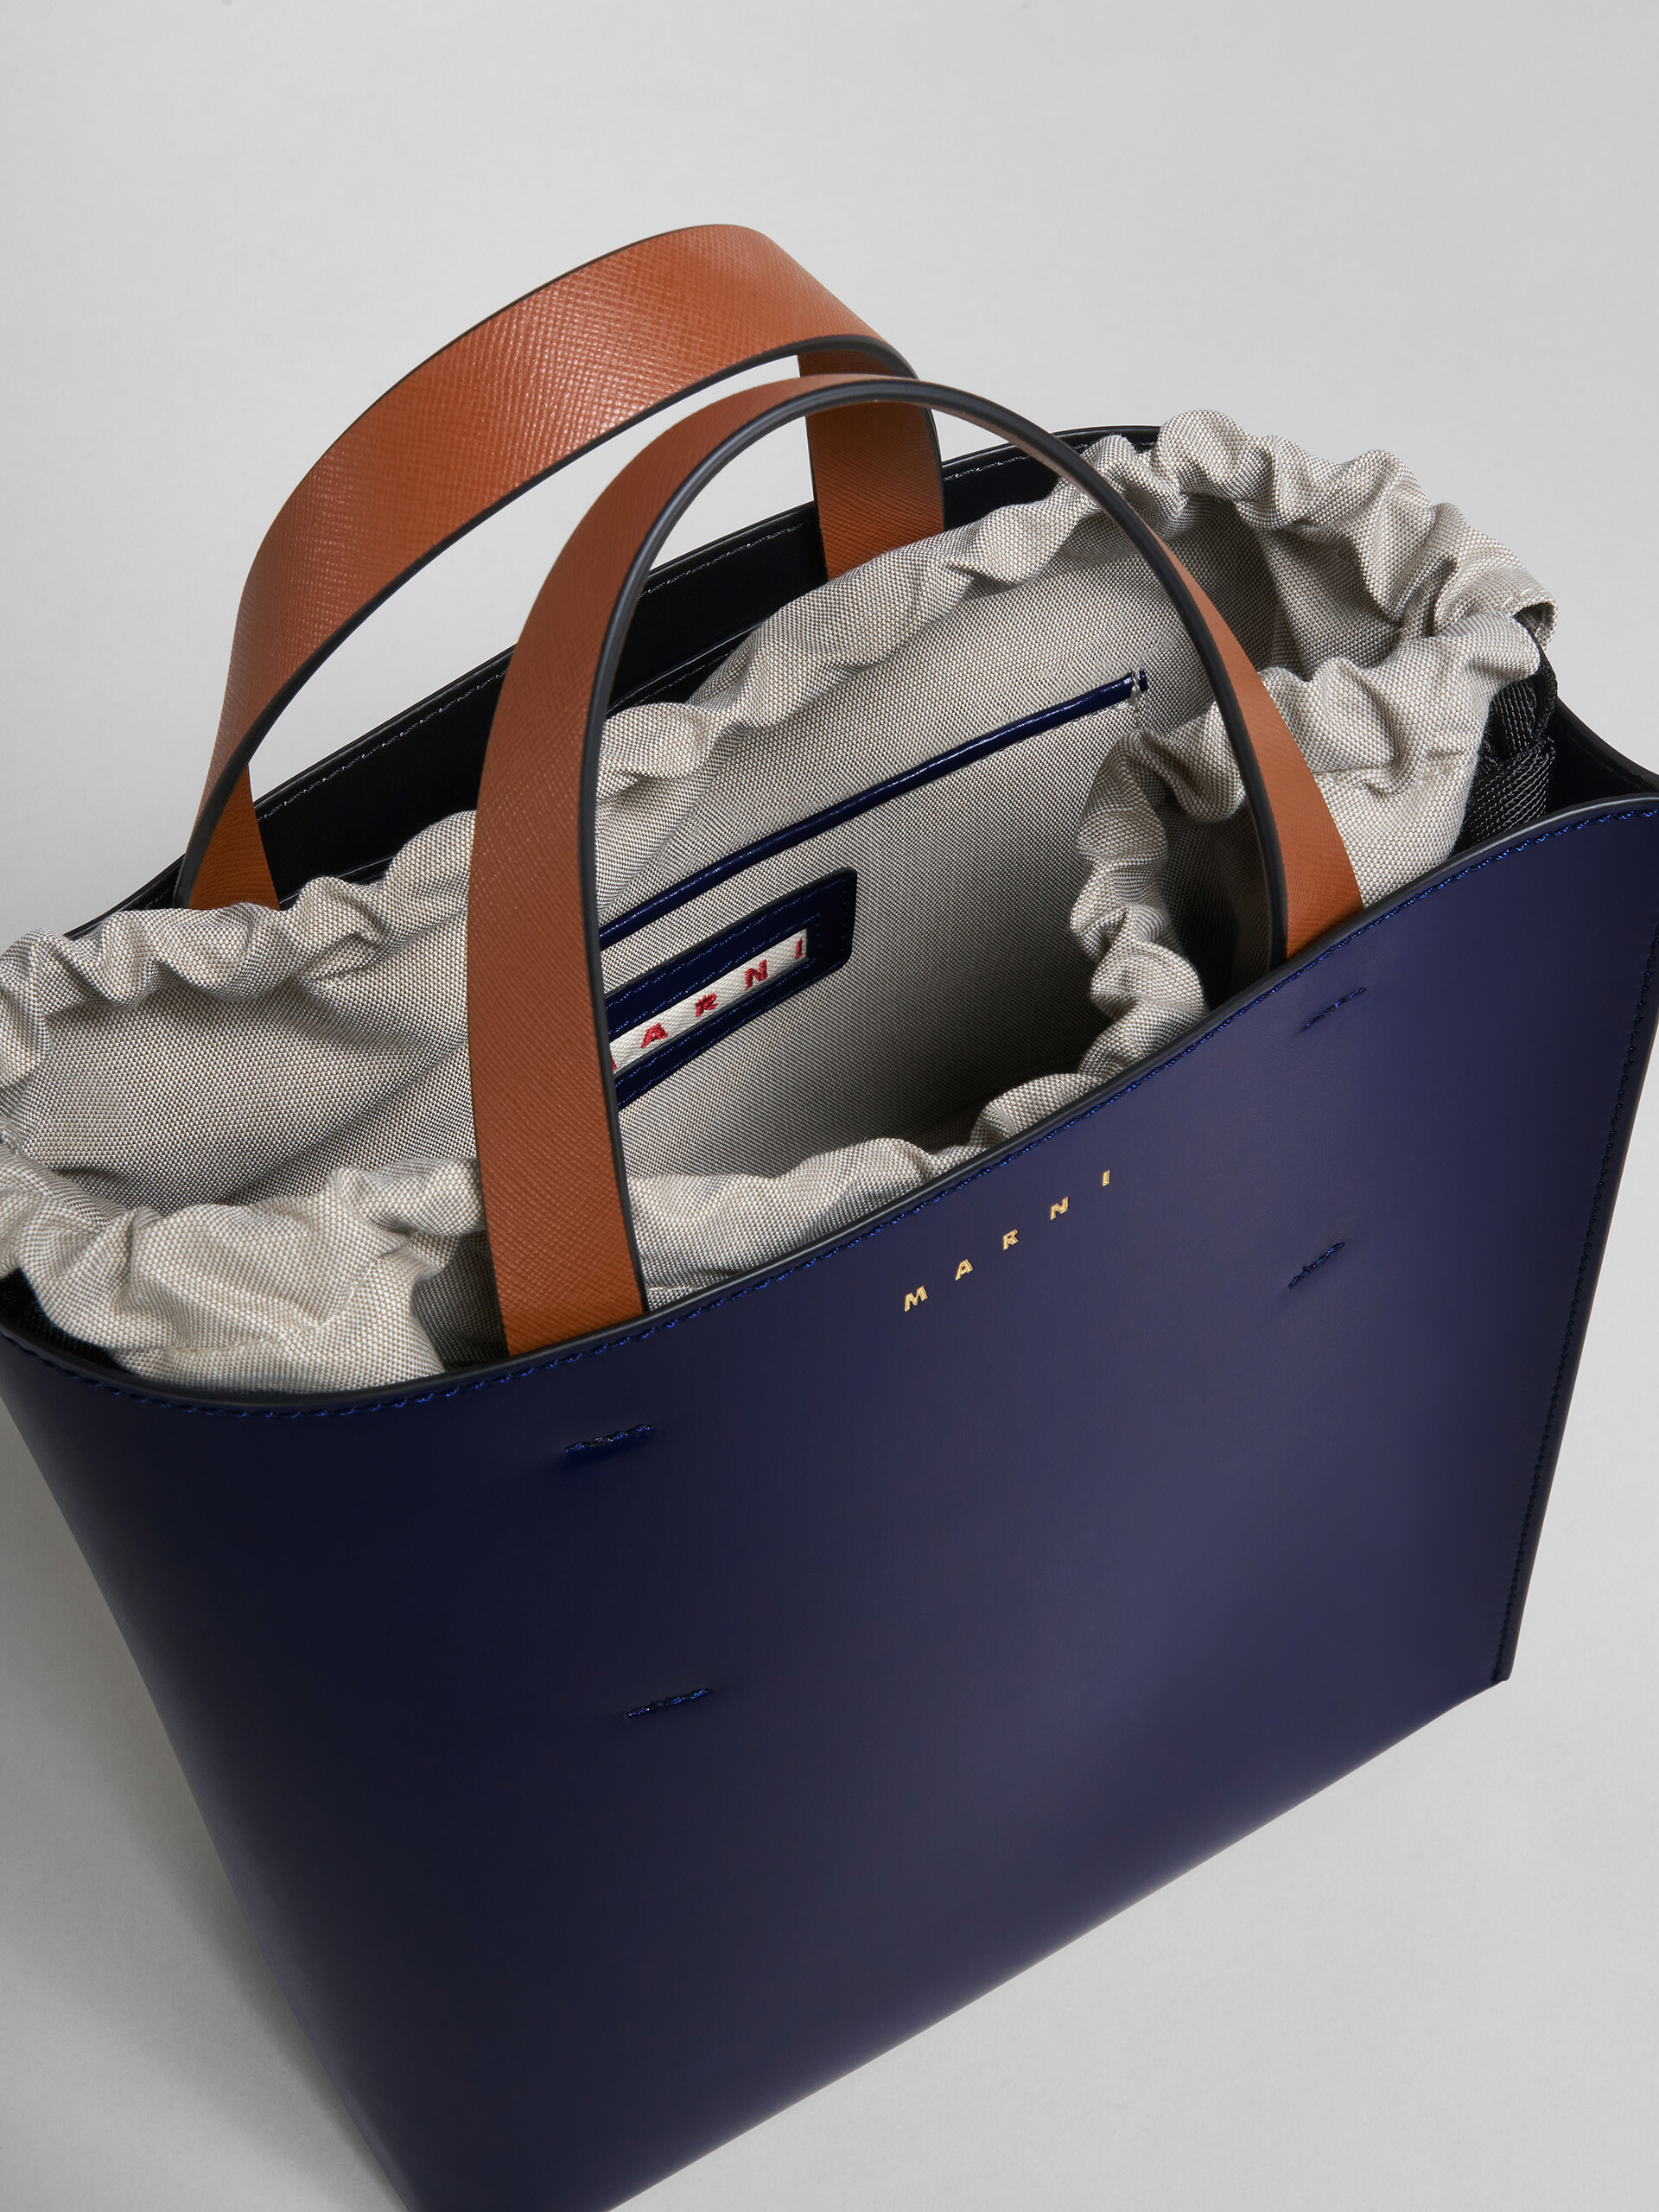 MUSEO bag piccola in pelle blu e bianca - Borse shopping - Image 4